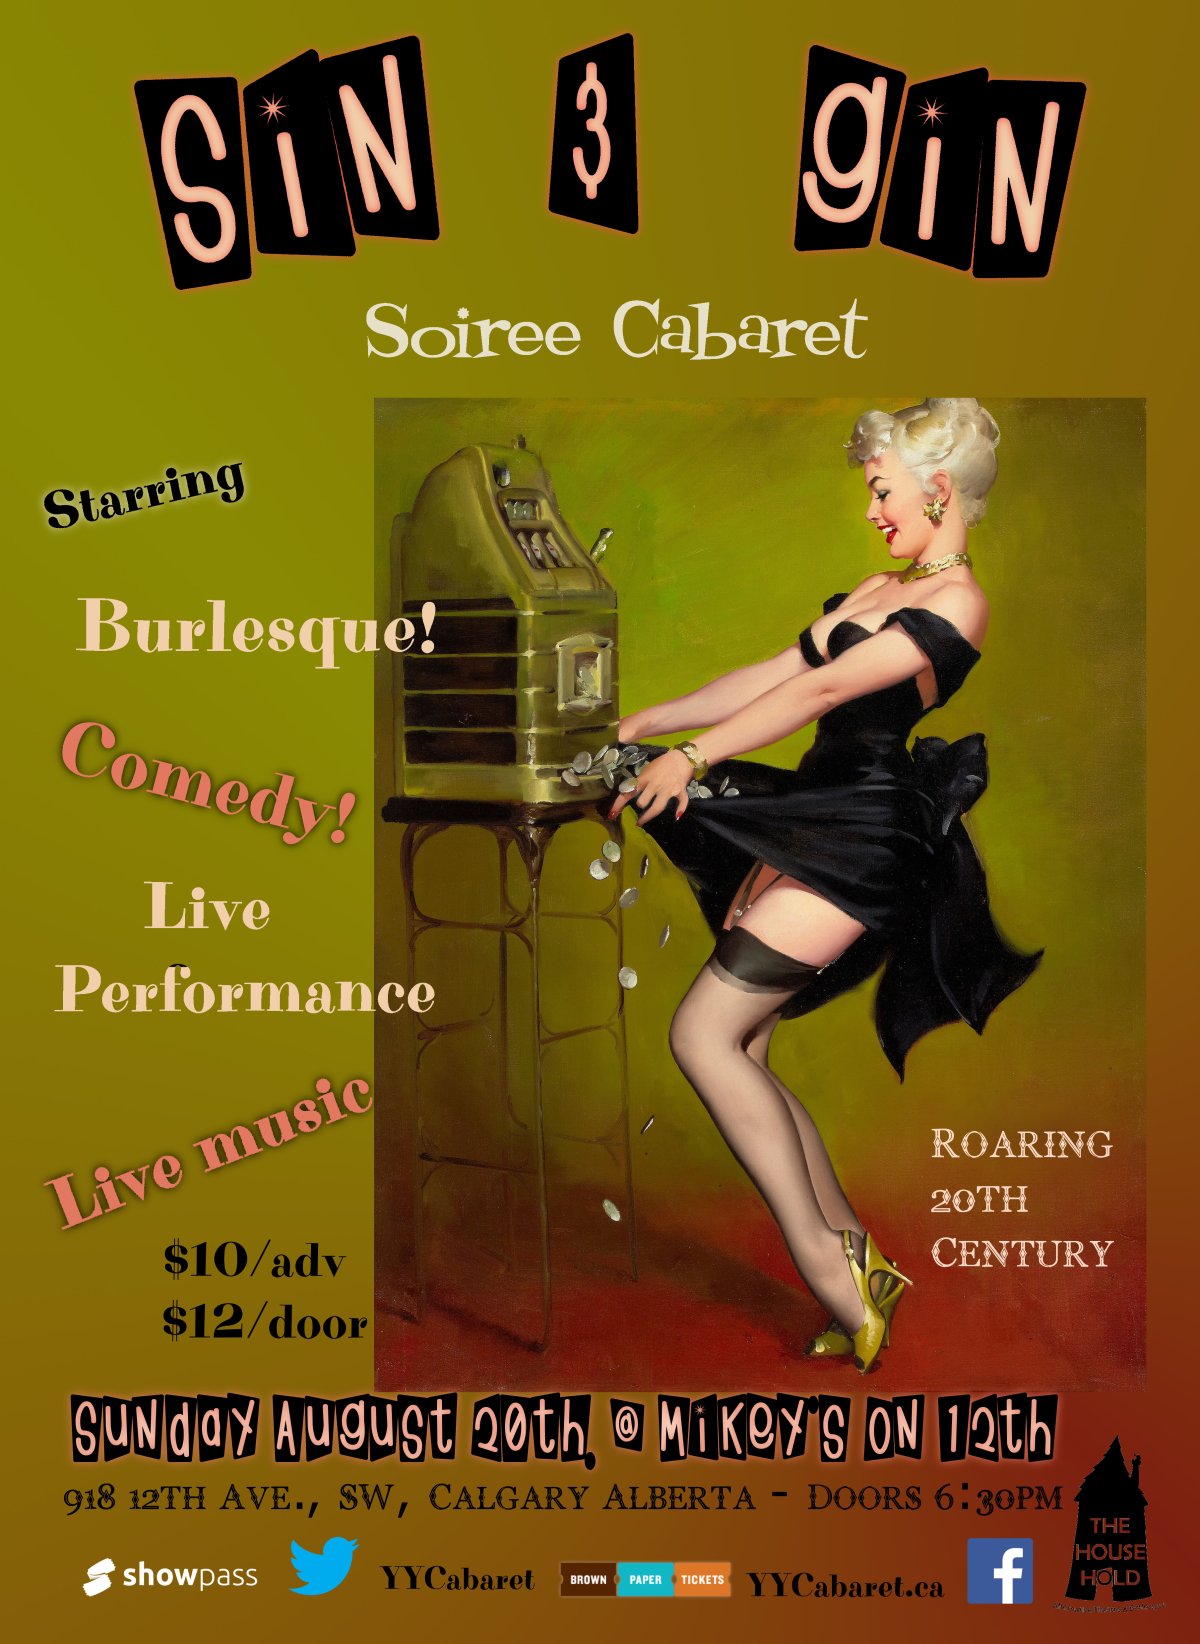 Sin & Gin Soiree Cabaret – Roaring 20th Century - image